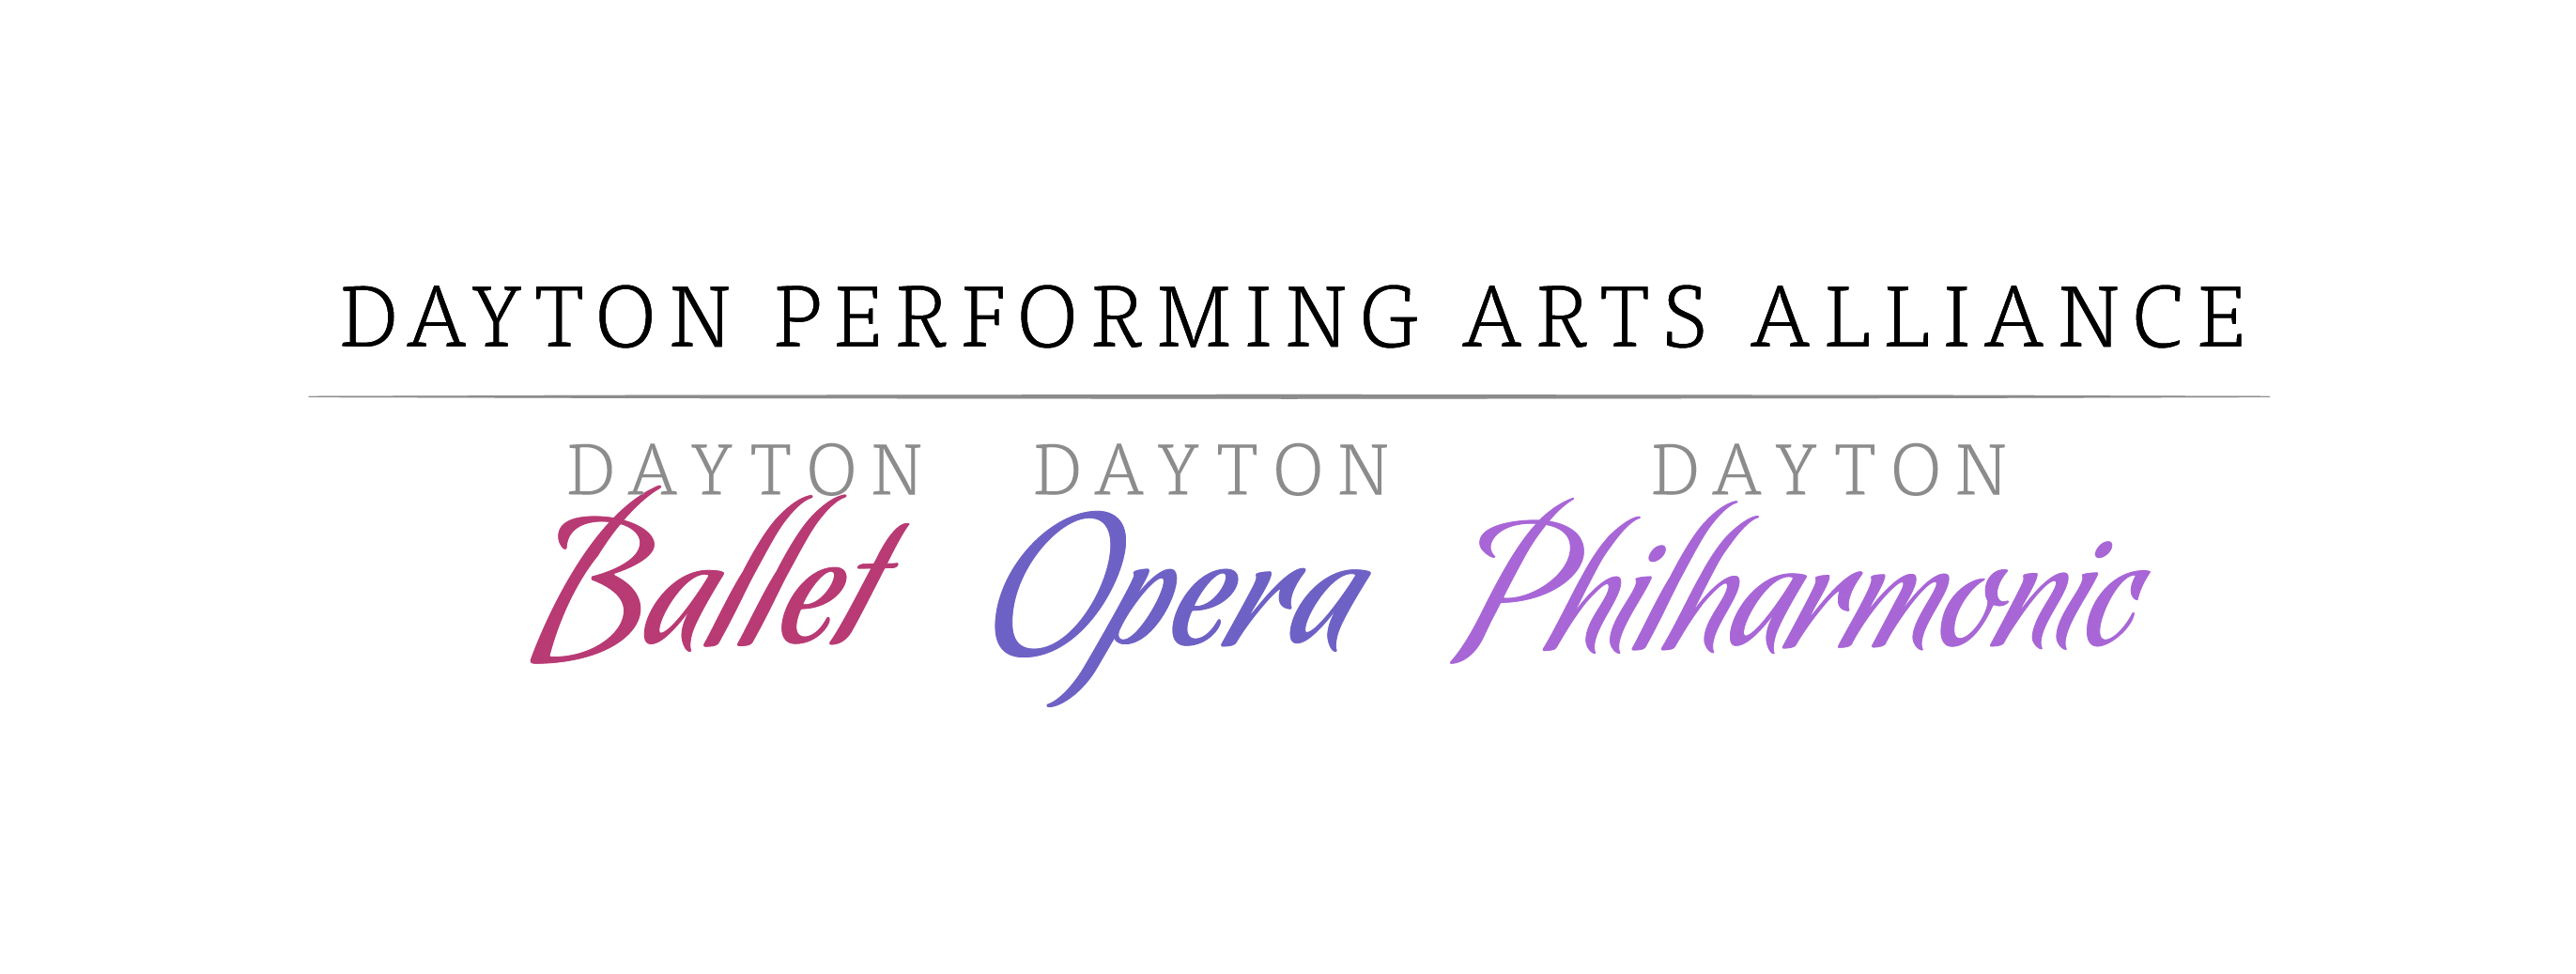 Dayton Ballet School logo